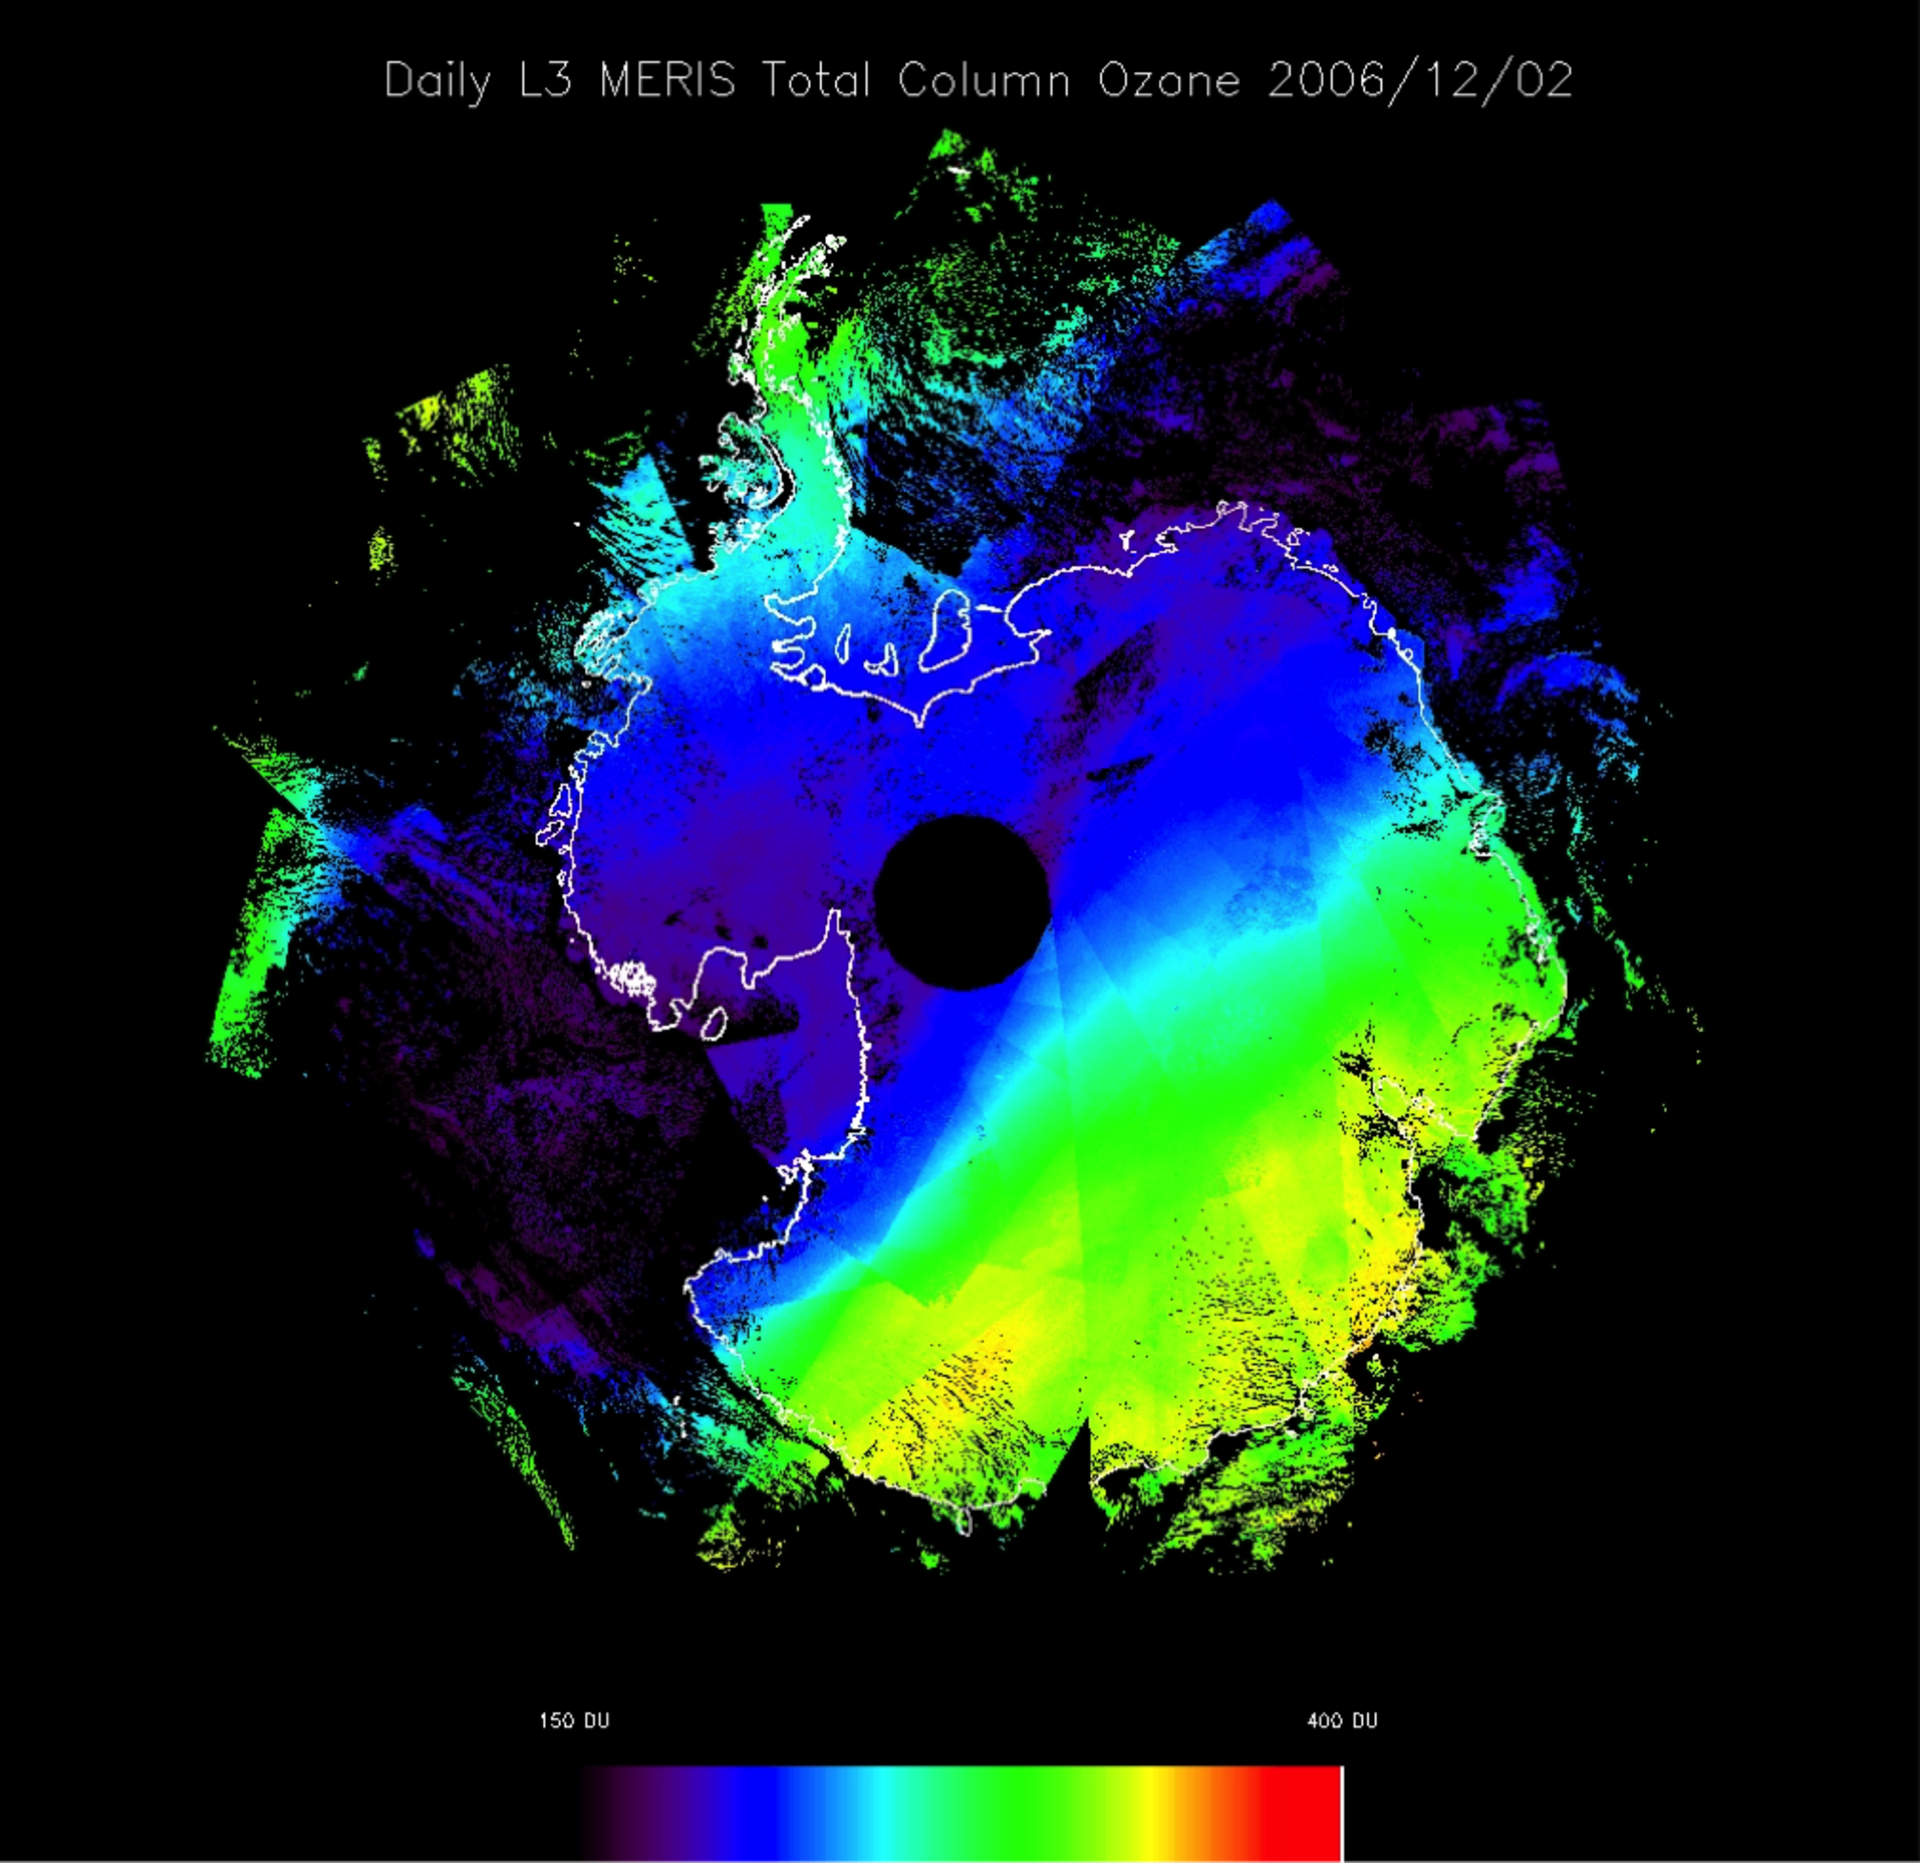 Daily L3 MERIS total column ozone, 2 December 2006